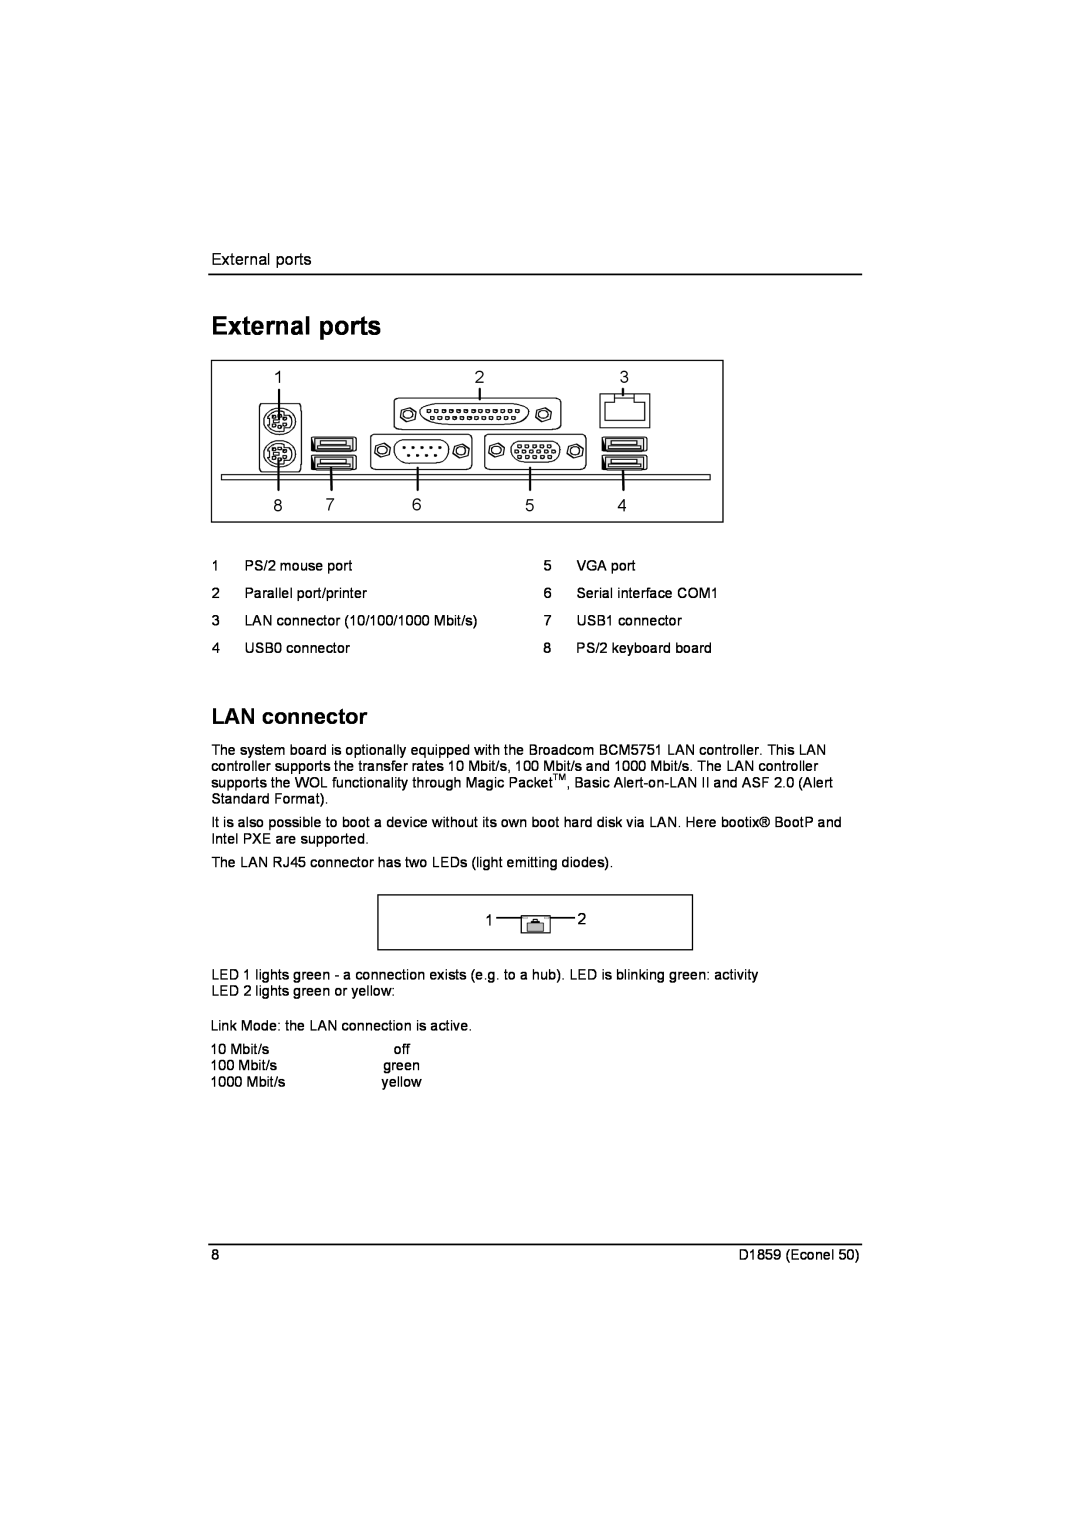 Fujitsu D1859 technical manual External ports, LAN connector 